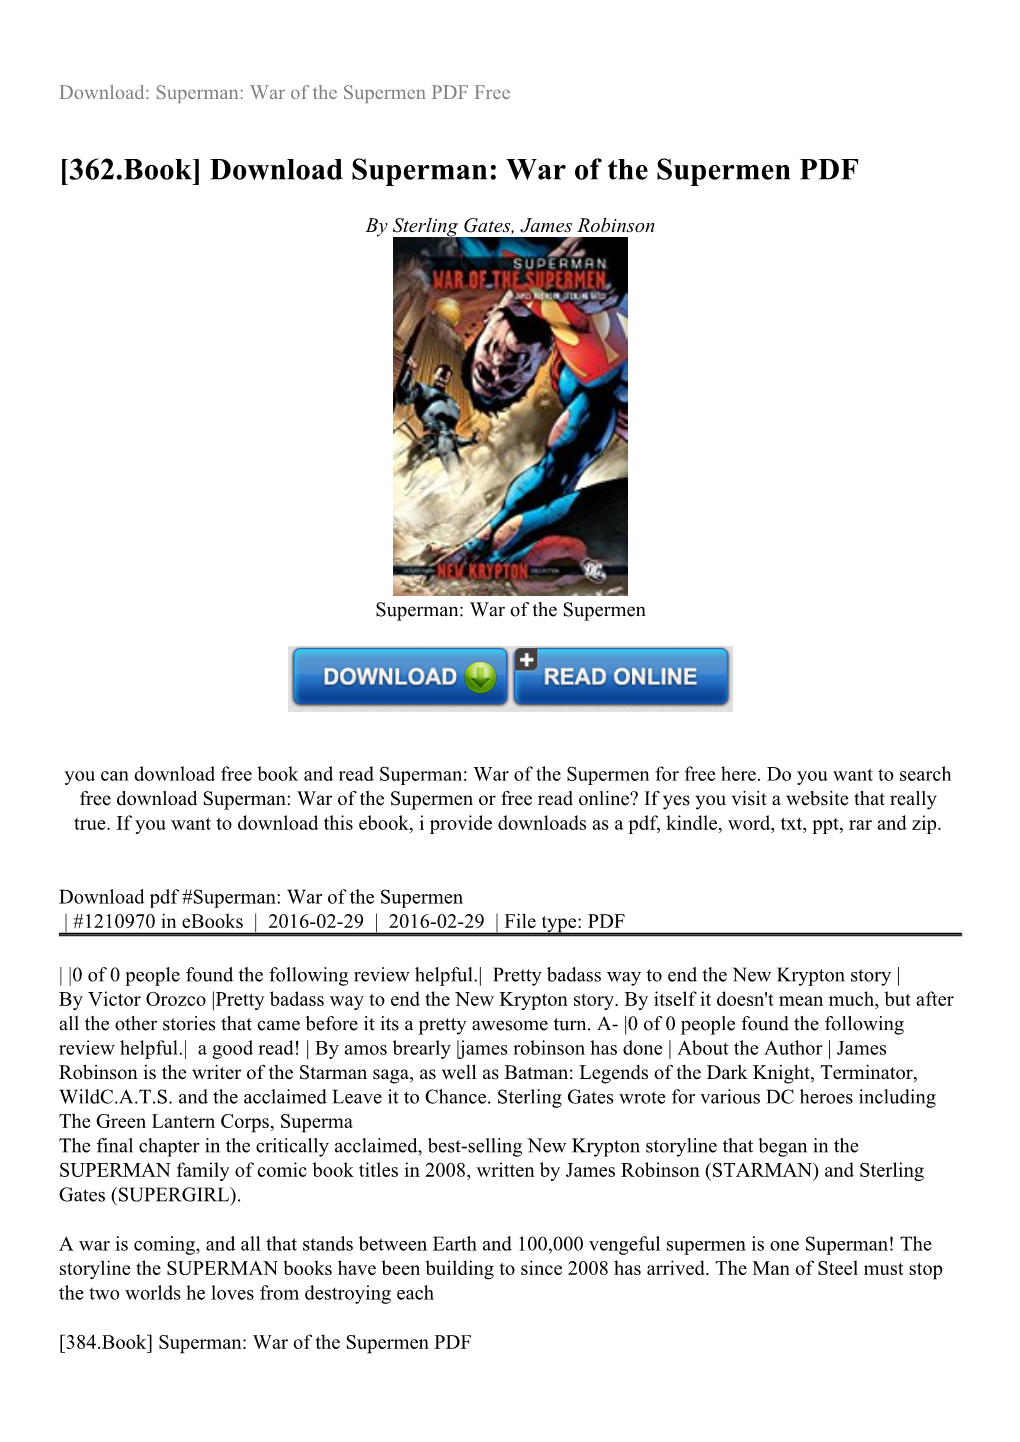 Download Superman: War of the Supermen PDF